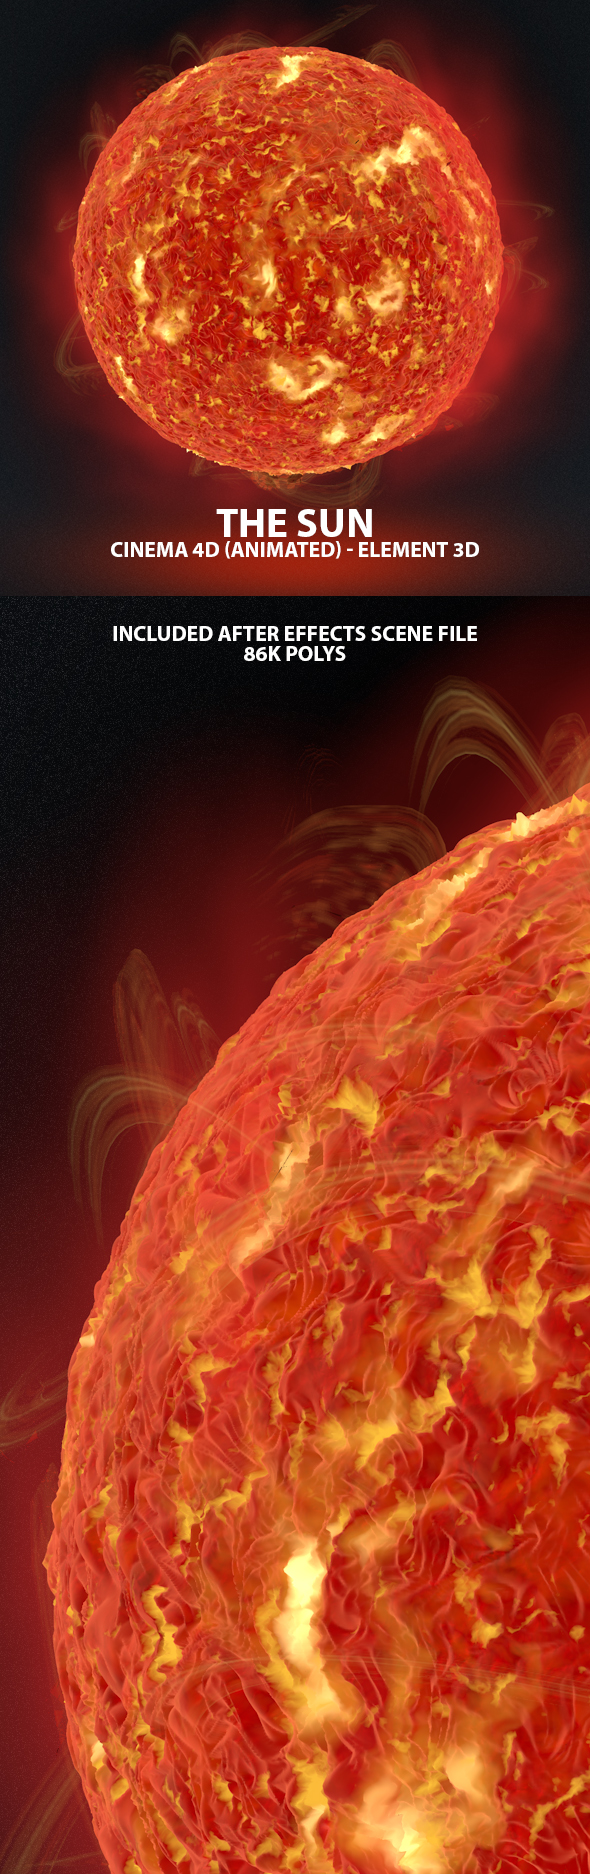 The Sun Animated 3D Model for Cinema 4D & Element 3D